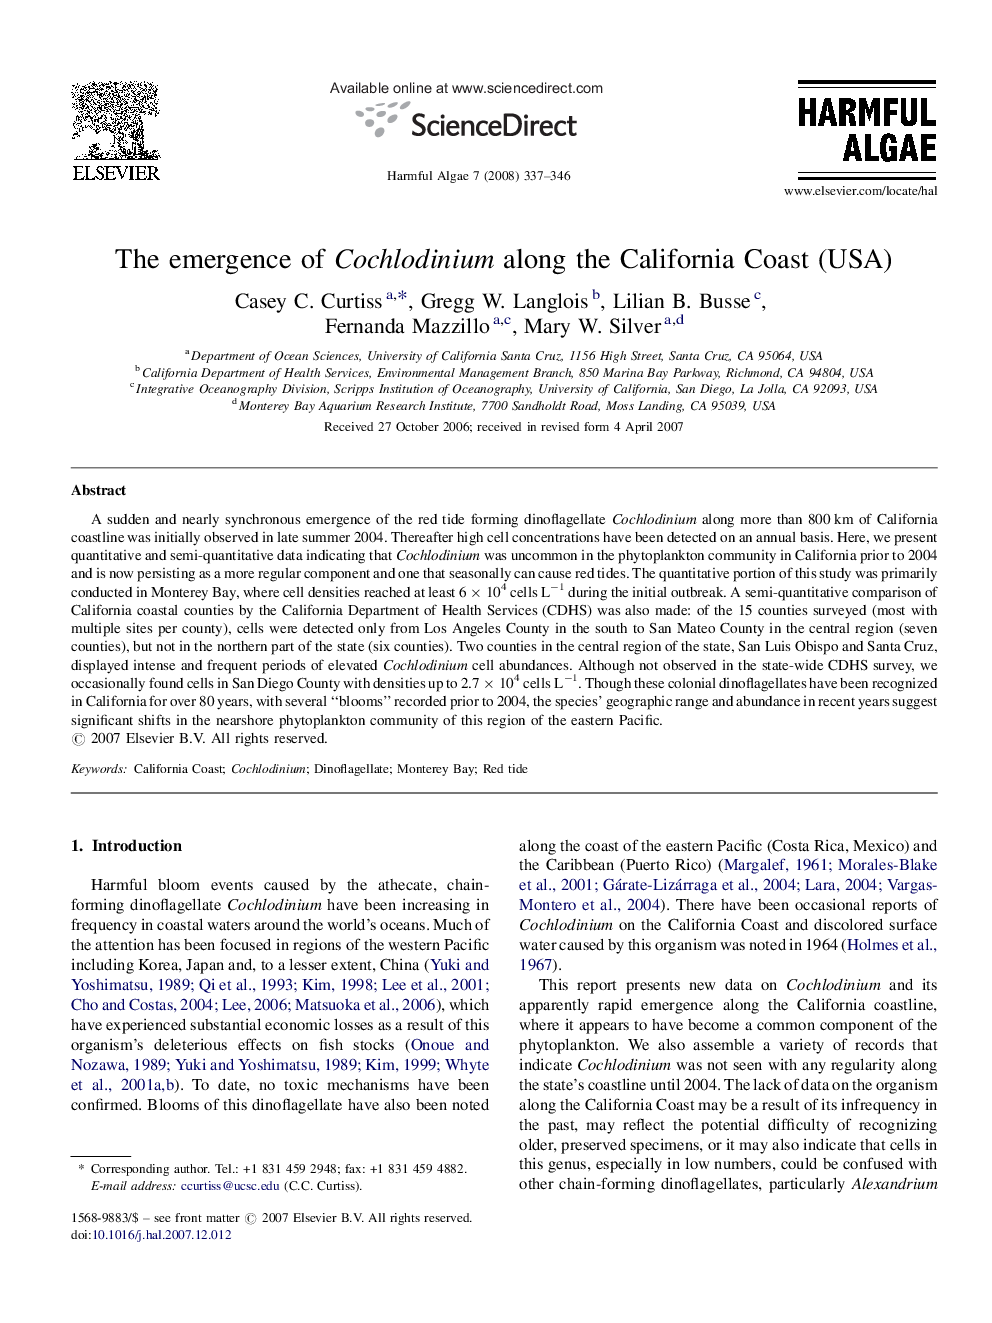 The emergence of Cochlodinium along the California Coast (USA)